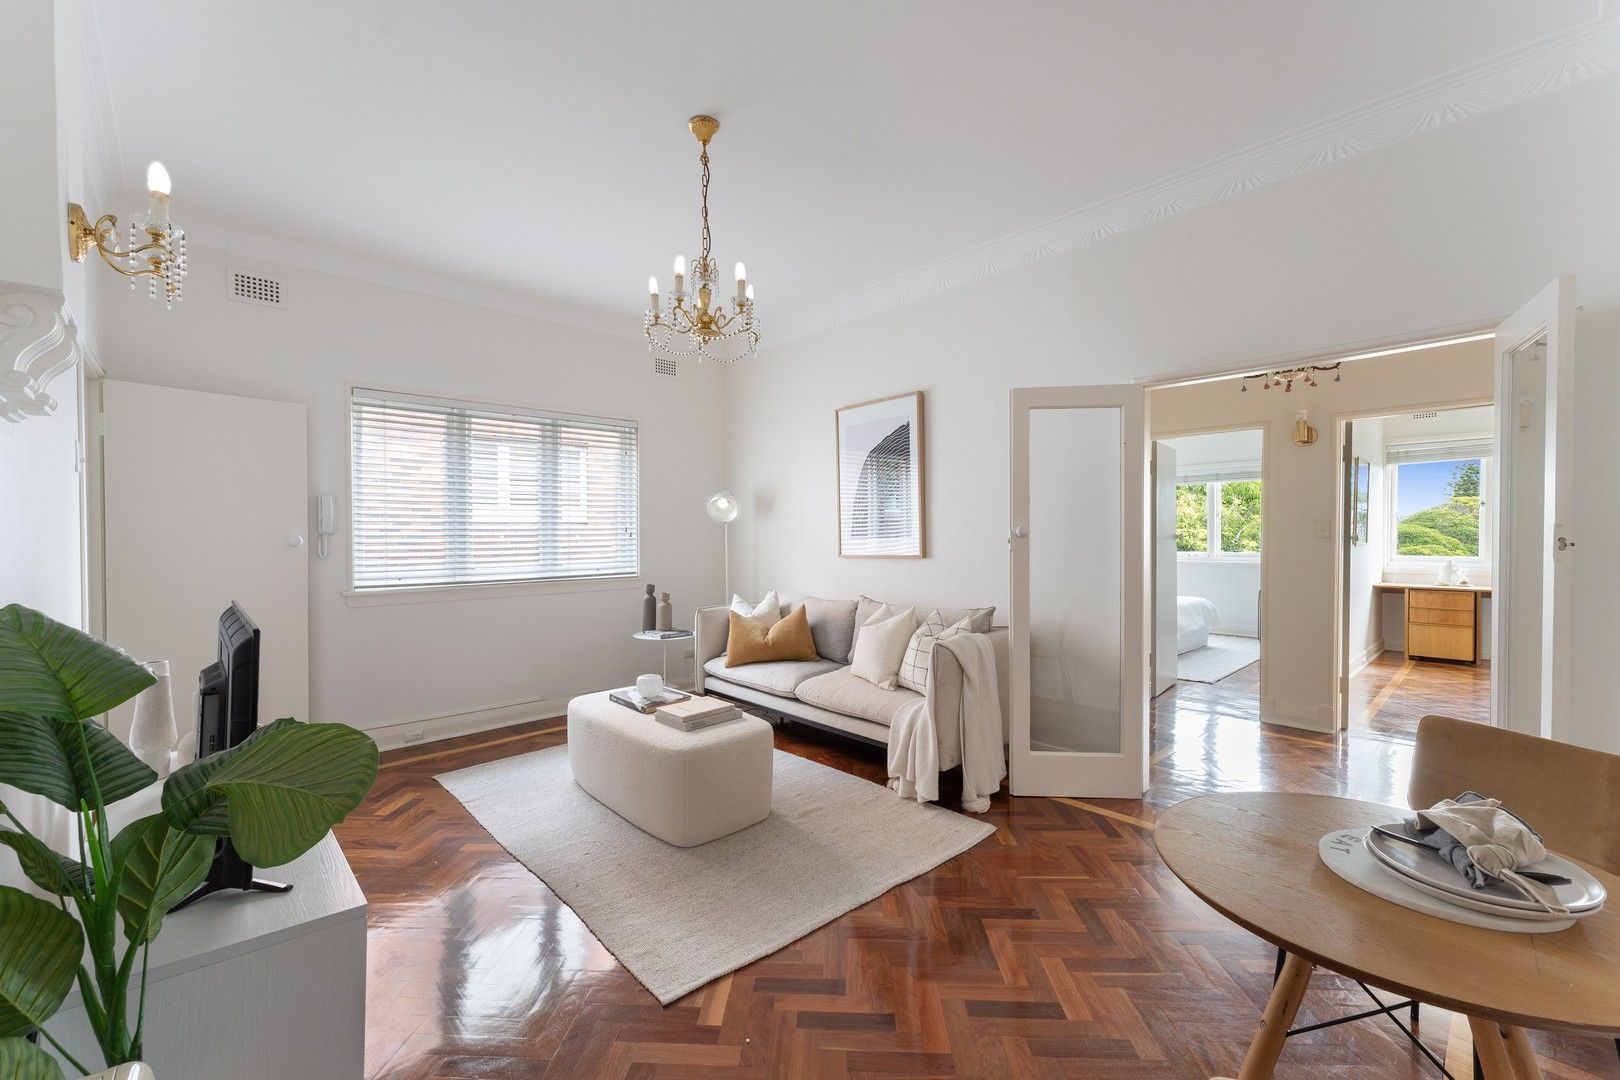 3 bedrooms Apartment / Unit / Flat in 4/22 Streatfield Road BELLEVUE HILL NSW, 2023